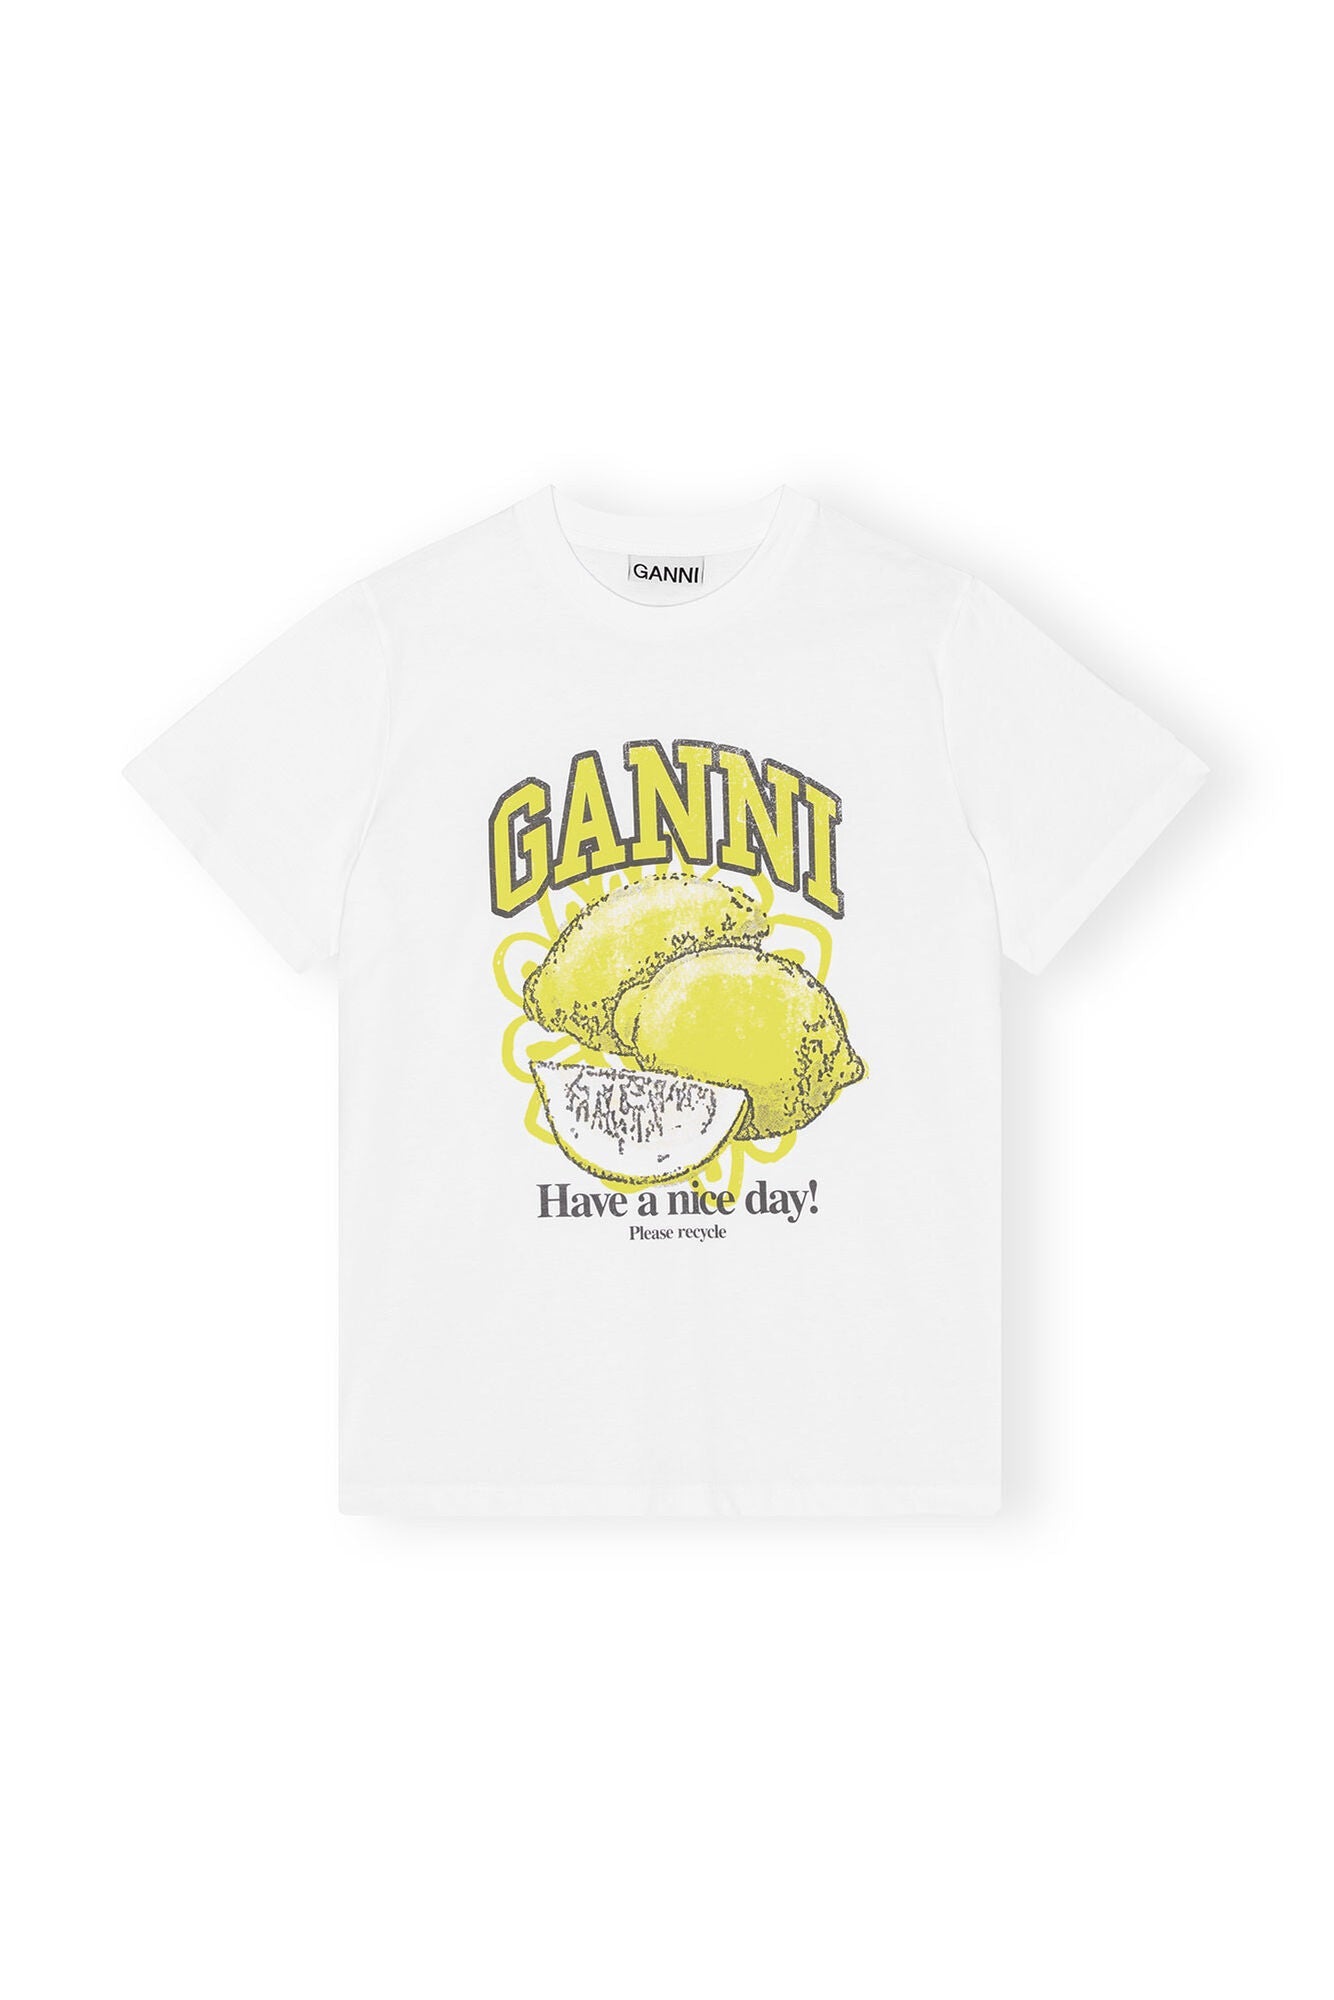 Basic Jersey Lemon Relaxed T-Shirt - Ganni - Danali - T3768-151-XS